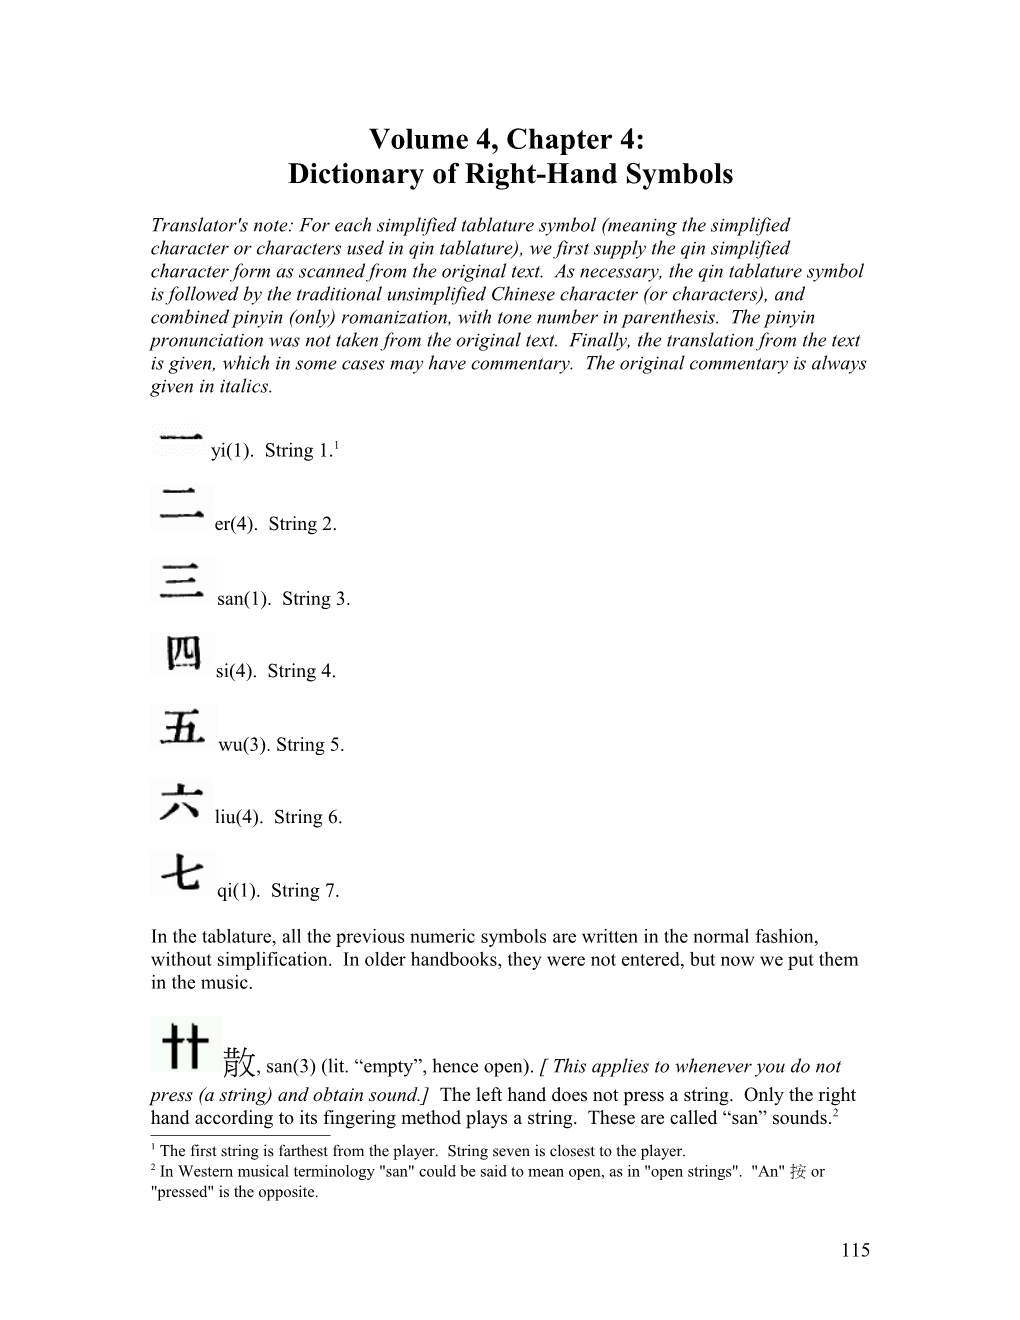 Dictionary of Right-Hand Symbols